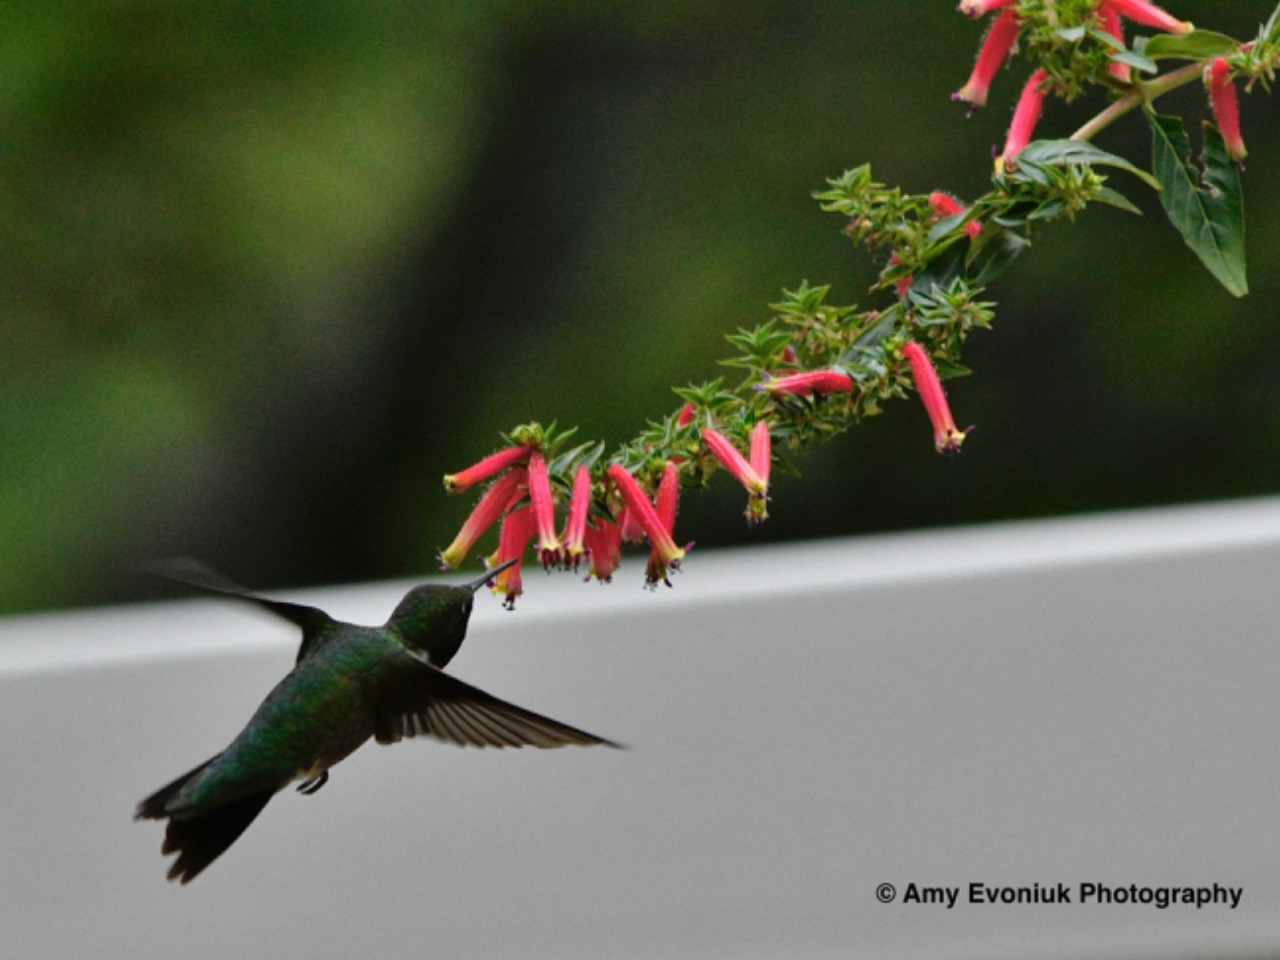 A hummingbird, seen from the back, visits a Golden Bells Cuphea plant